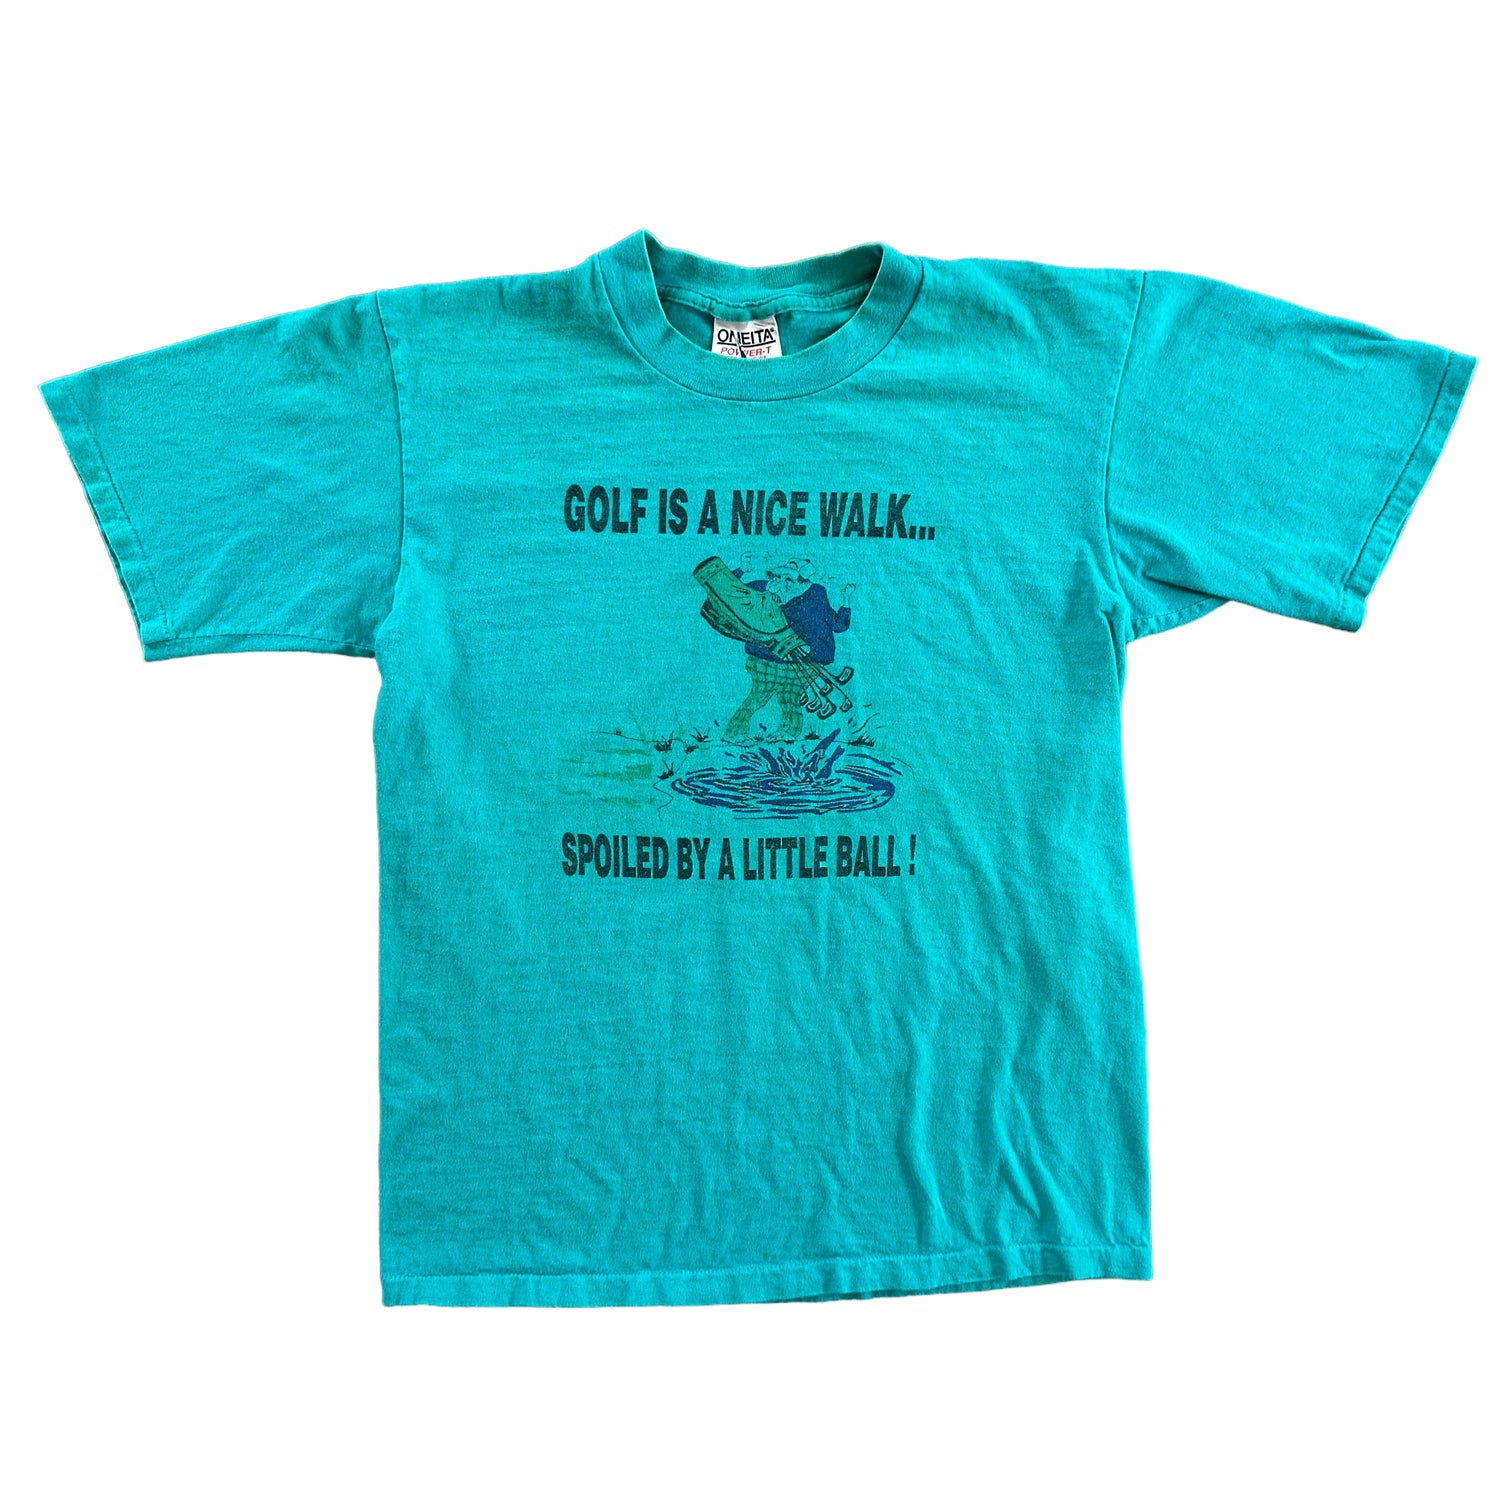 Vintage 1990s Golf T-shirt size Large